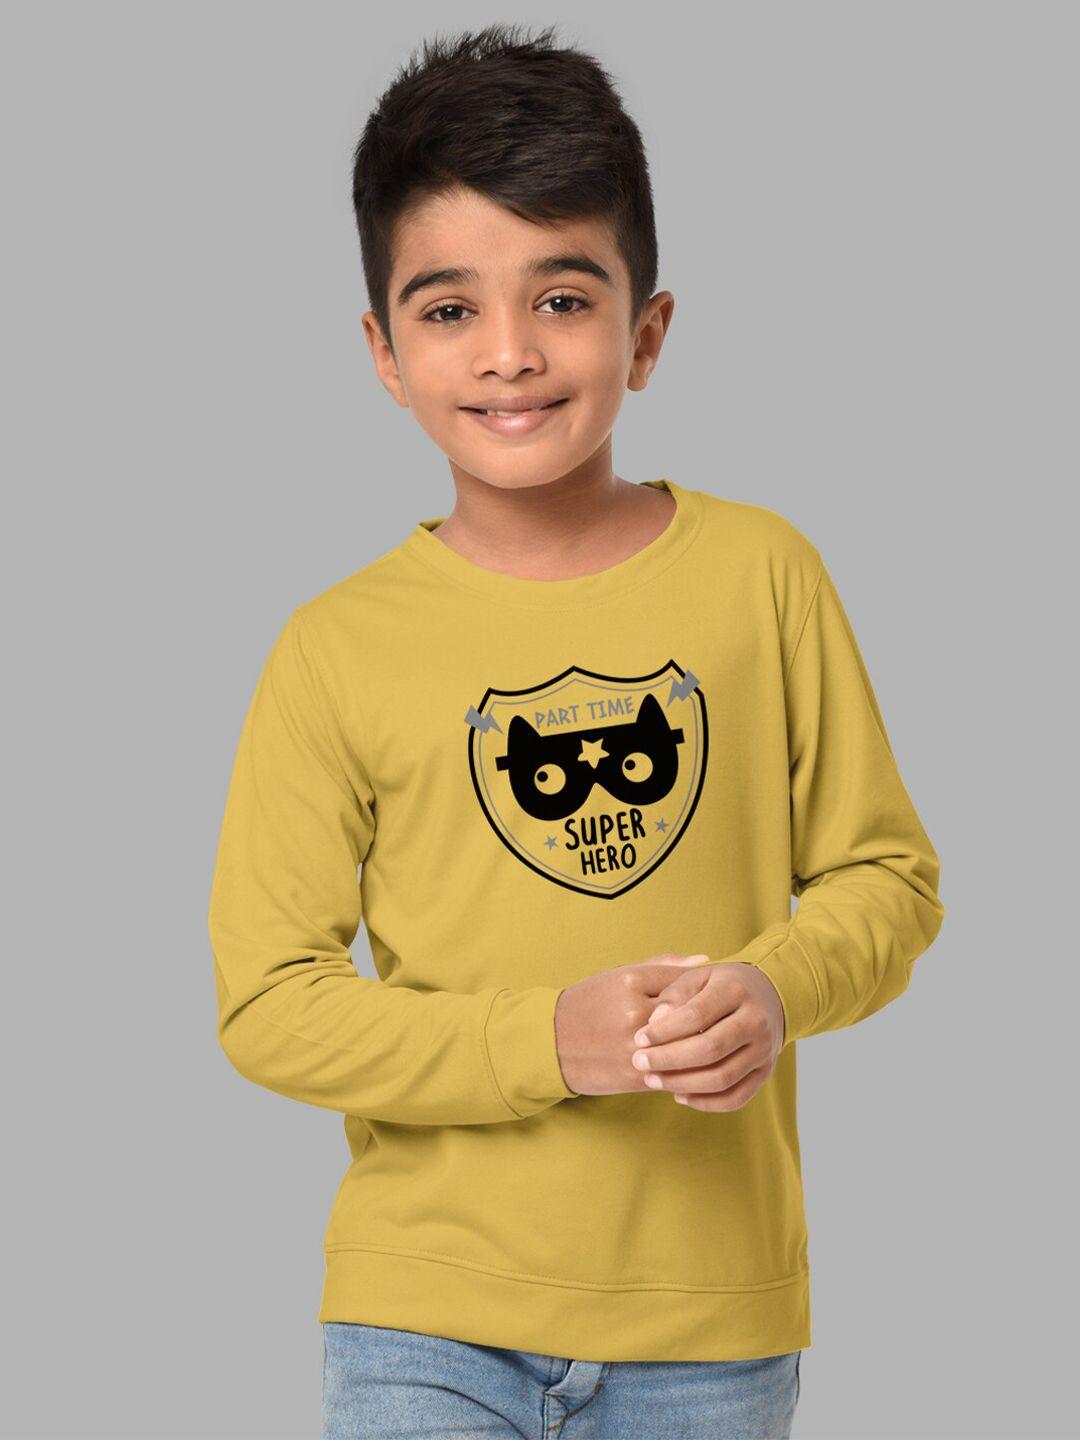 hellcat boys yellow printed regular fit blended cotton long sleeve bio finish t-shirt